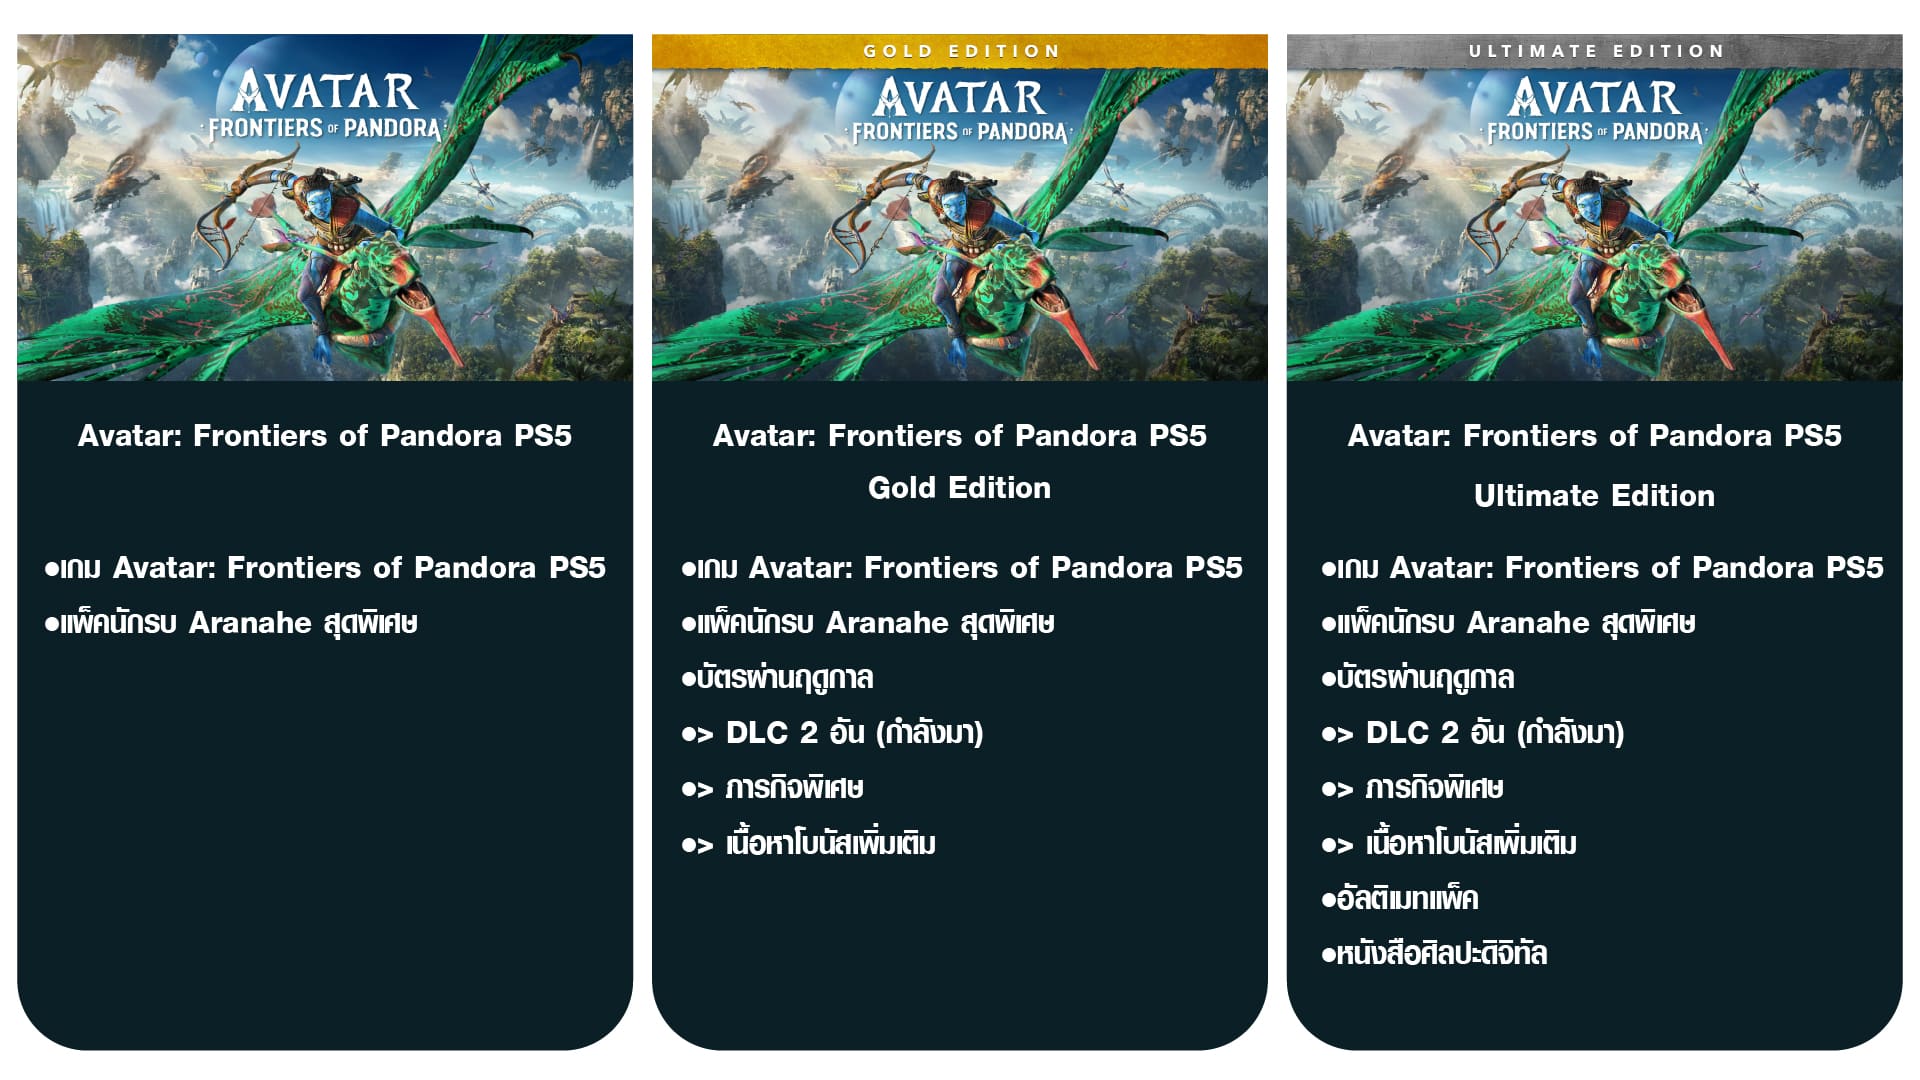 Avatar Frontiers of Pandora Edition มีเอดิชั่นอะไรบ้าง